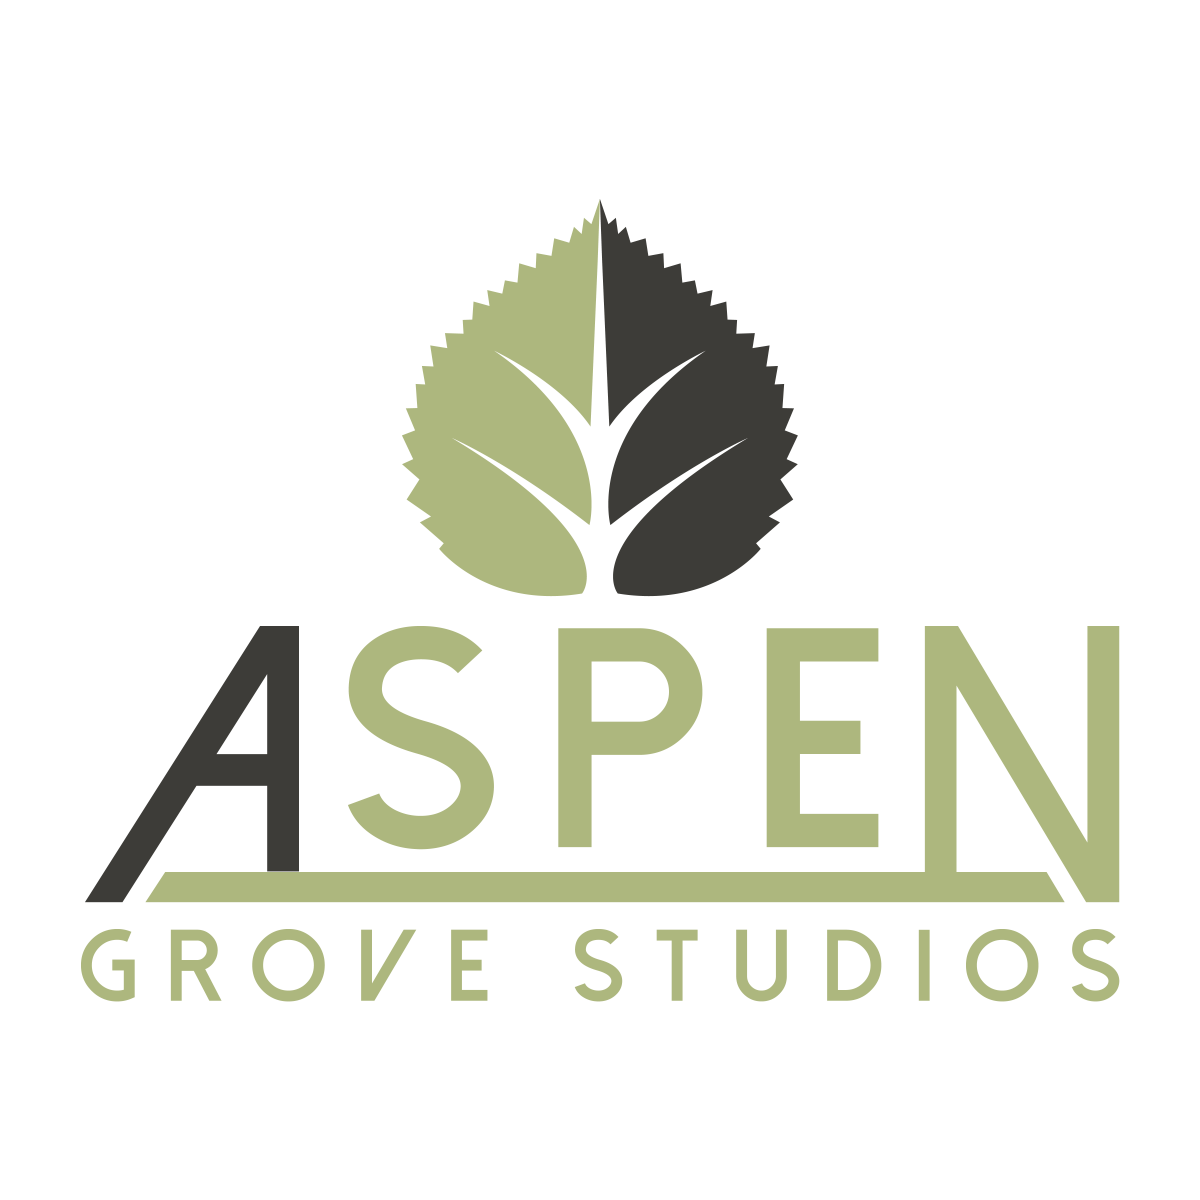 Aspen Grove Studios